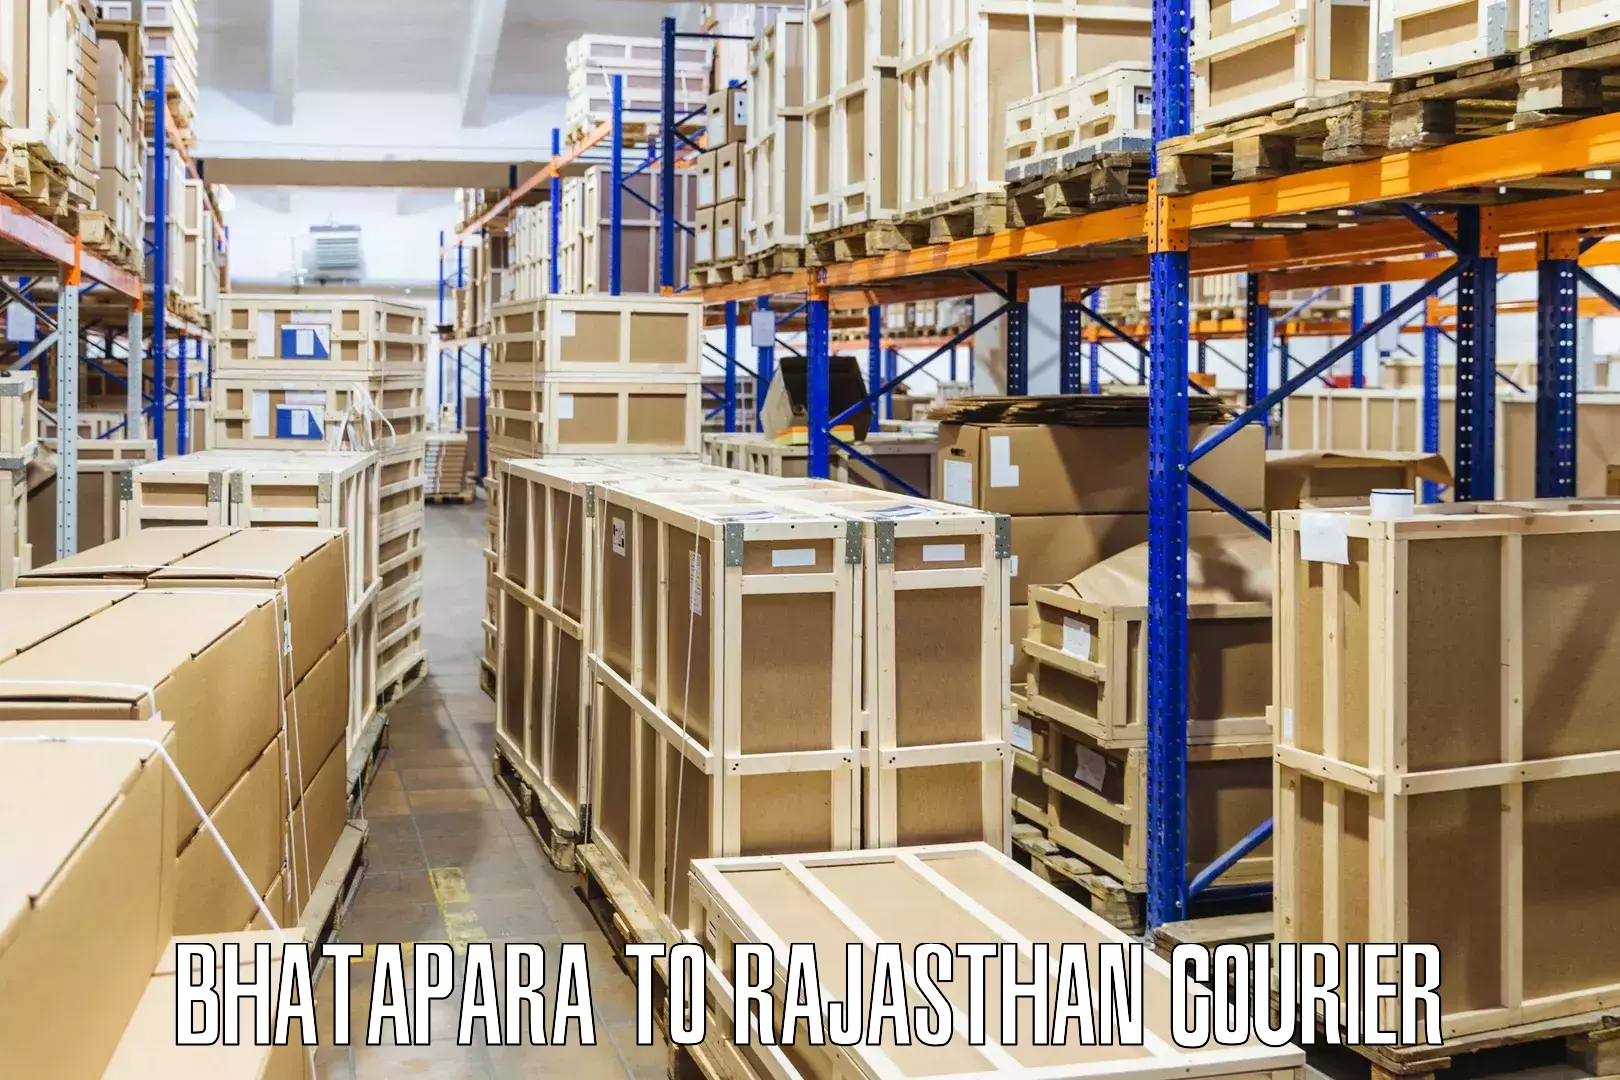 Sustainable courier practices Bhatapara to Khandela Sikar